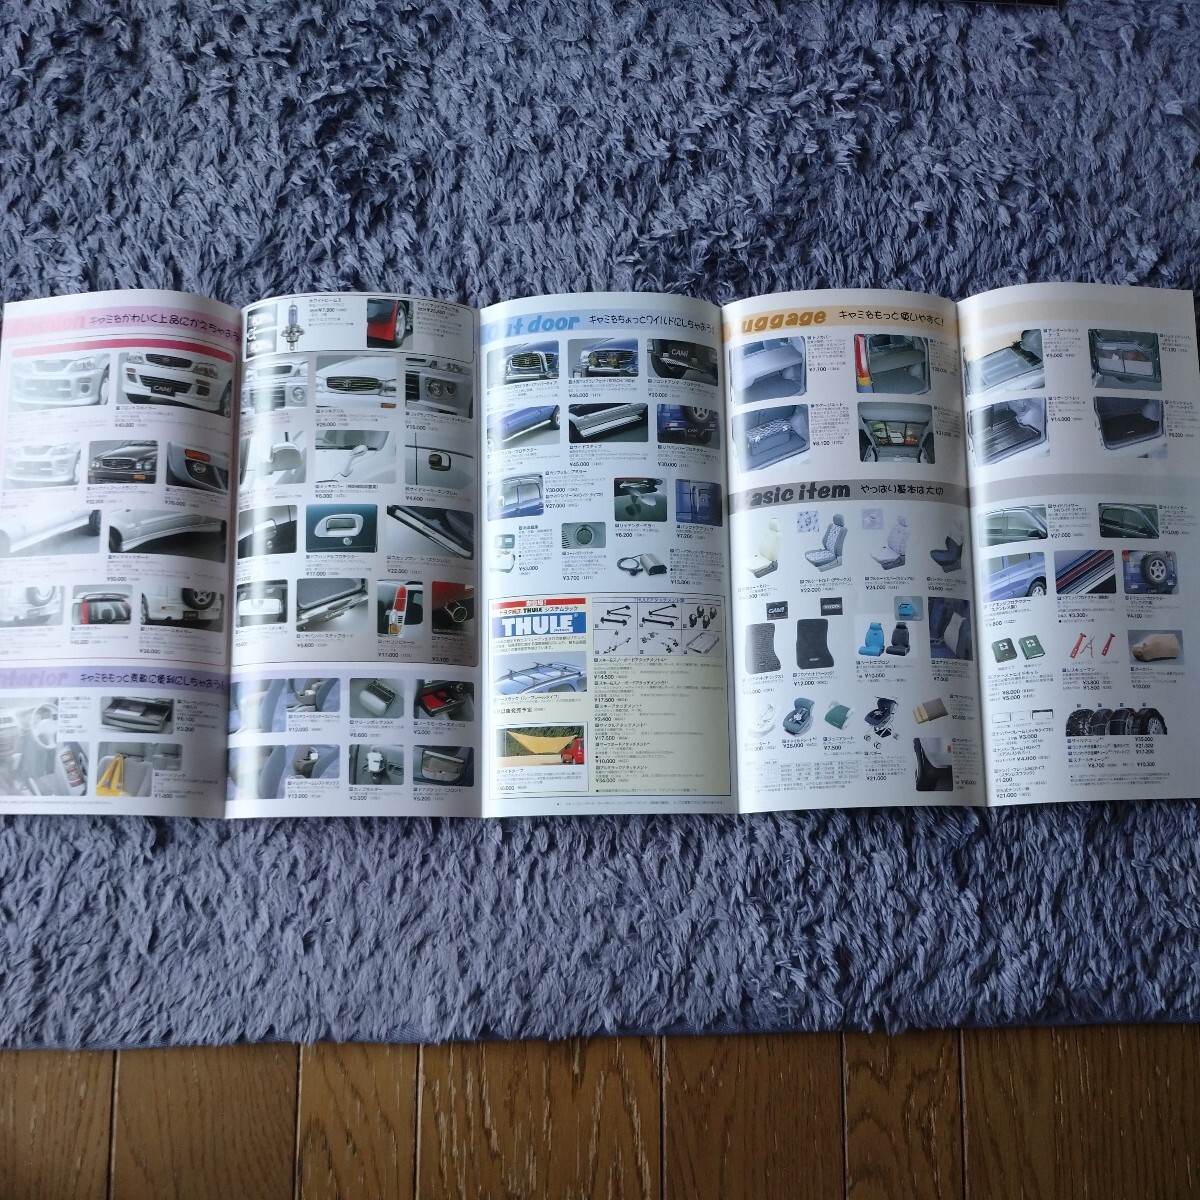  Toyota Cami CAMI 2000 год 5 месяц выпуск J100E full time 4WD 1300 бензиновая машина P31 основной каталог + аксессуары не прочитан товар 